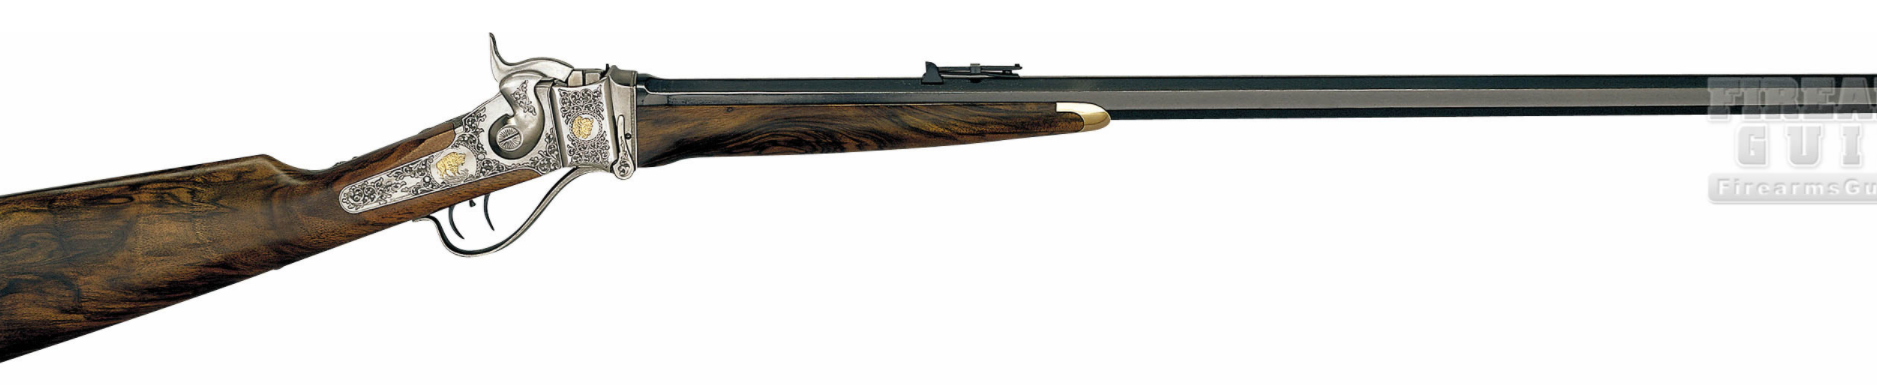 Pedersoli EMF Exclusive Deluxe Rifle